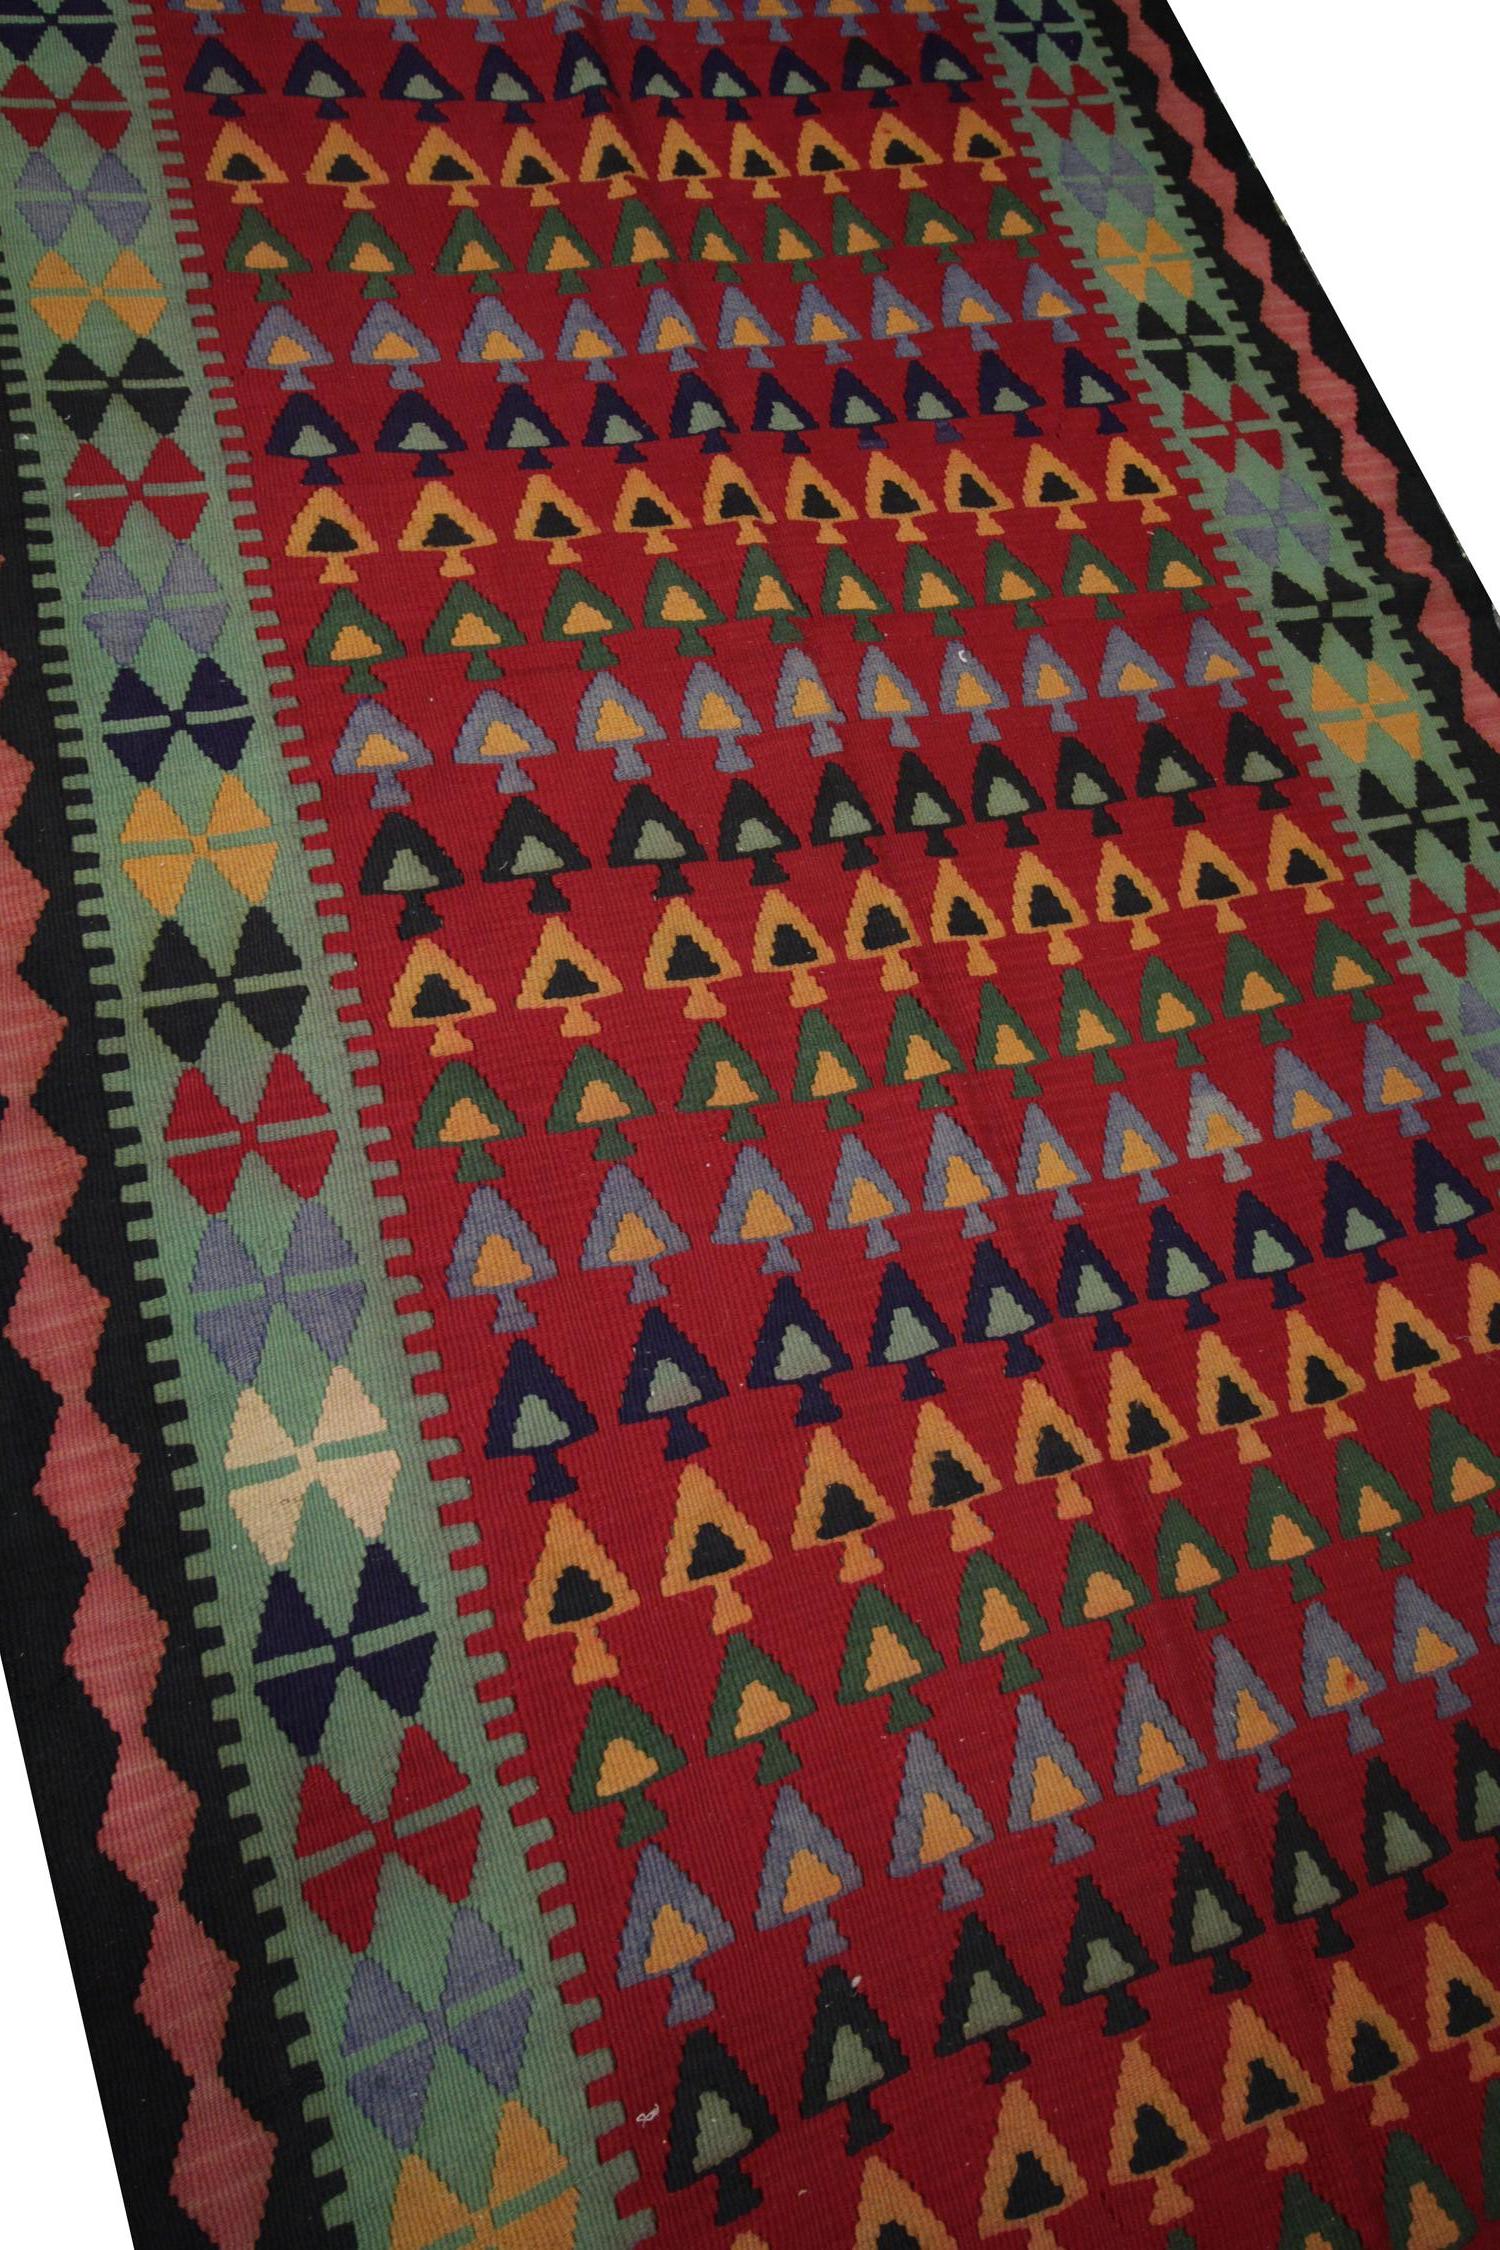 Azerbaijani Handmade Carpet Vintage Kilim Rug, Traditional Tribal Red Wool Area Rug For Sale